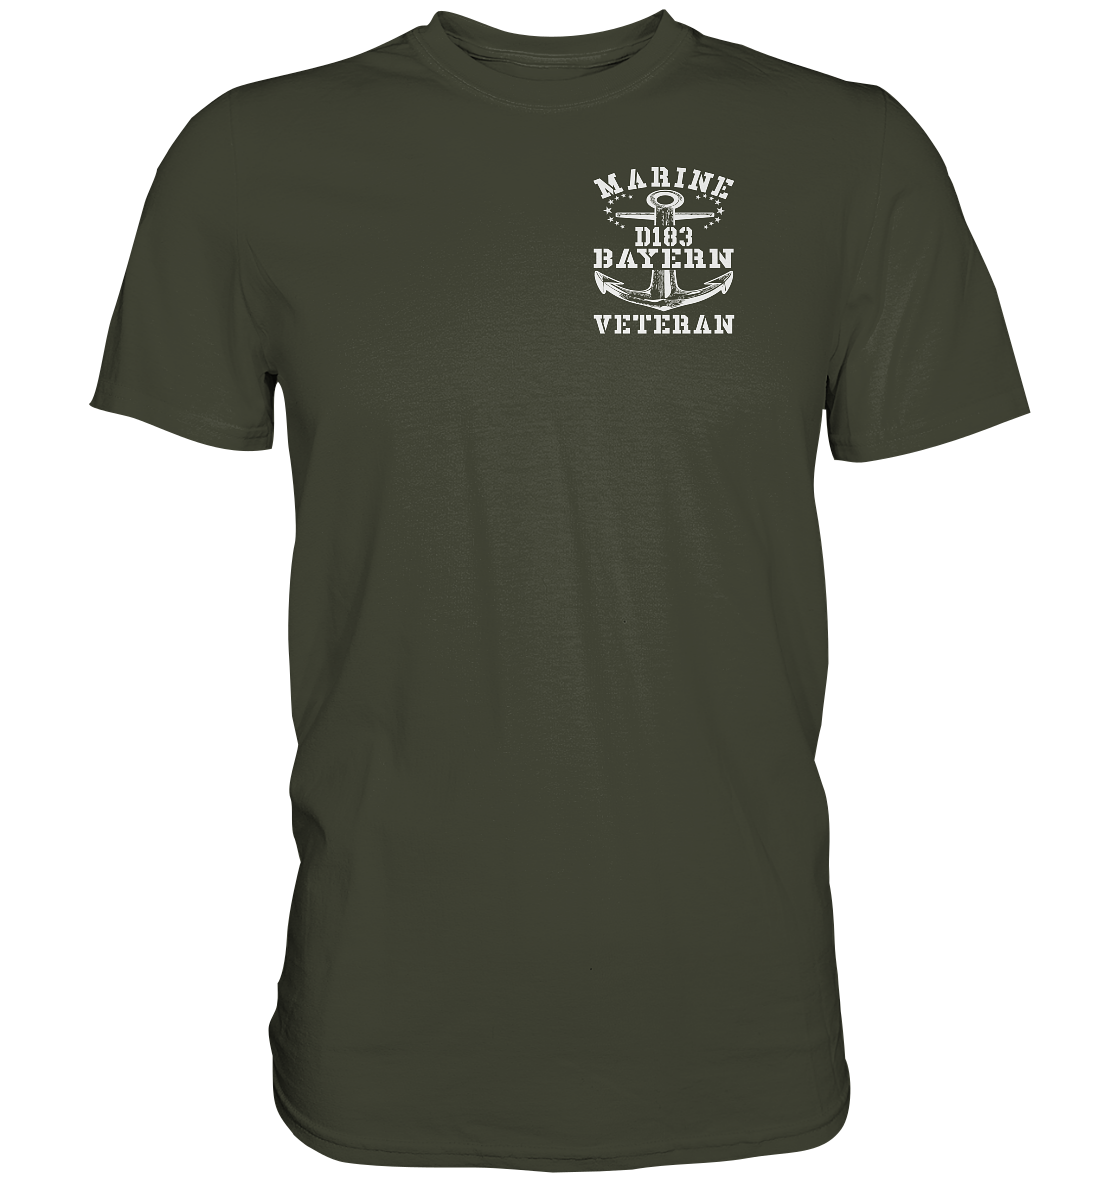 D183 Zerstörer BAYERN Marine Veteran Brustlogo - Premium Shirt